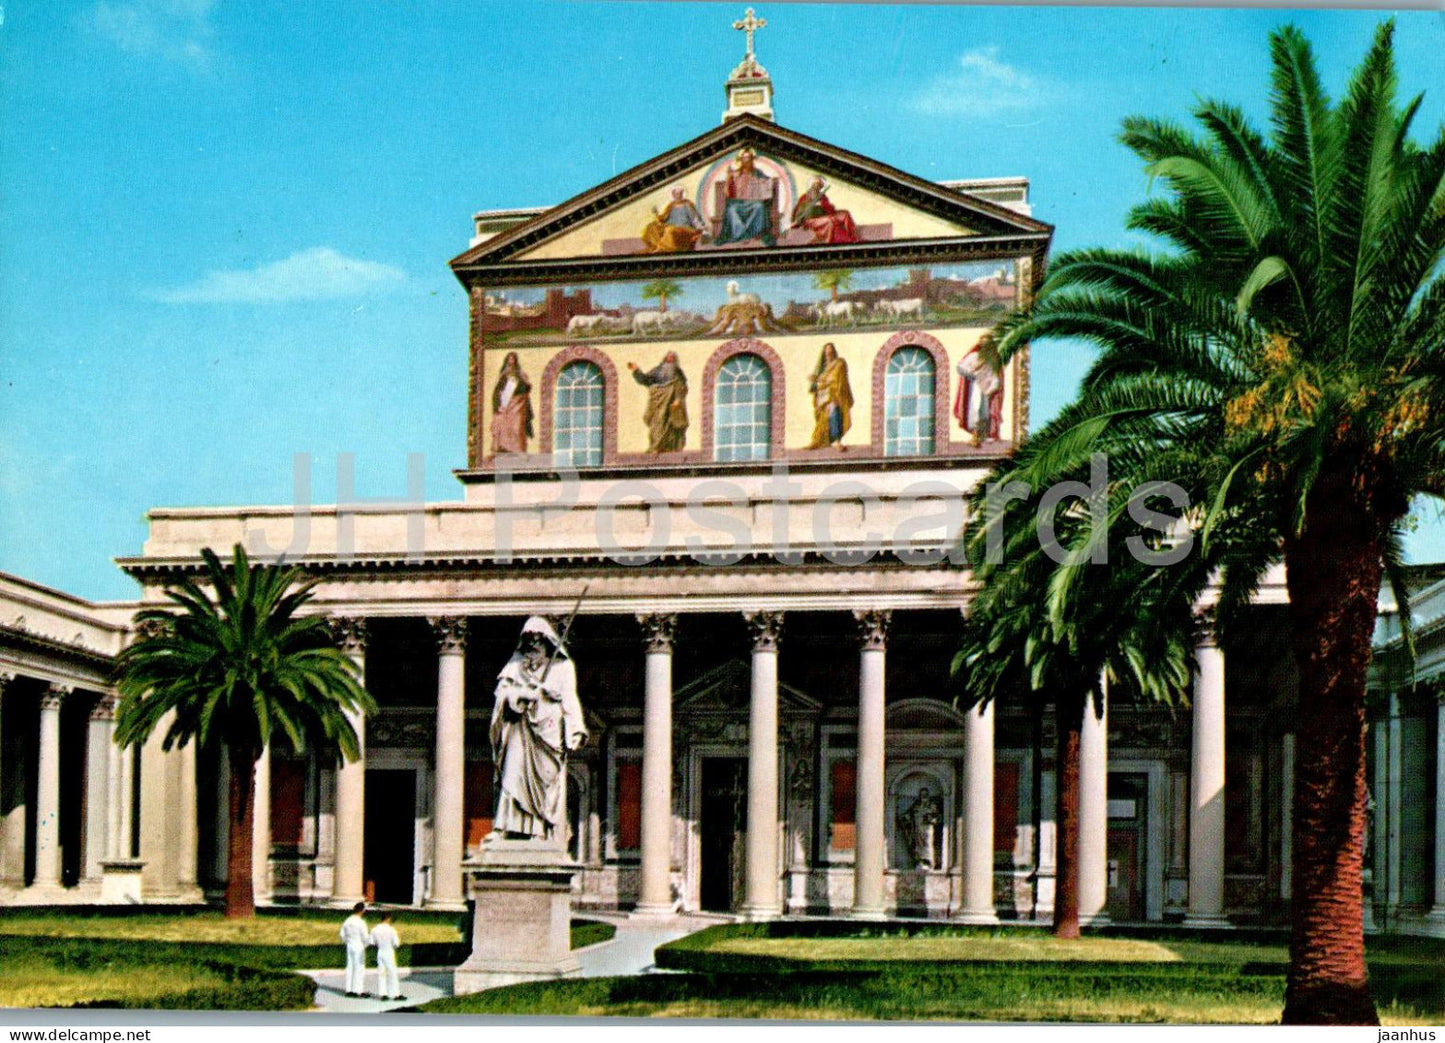 Roma - Rome - Basilica di S Paolo - St Paul's Basilica - ancient world - 218 - Italy - unused - JH Postcards